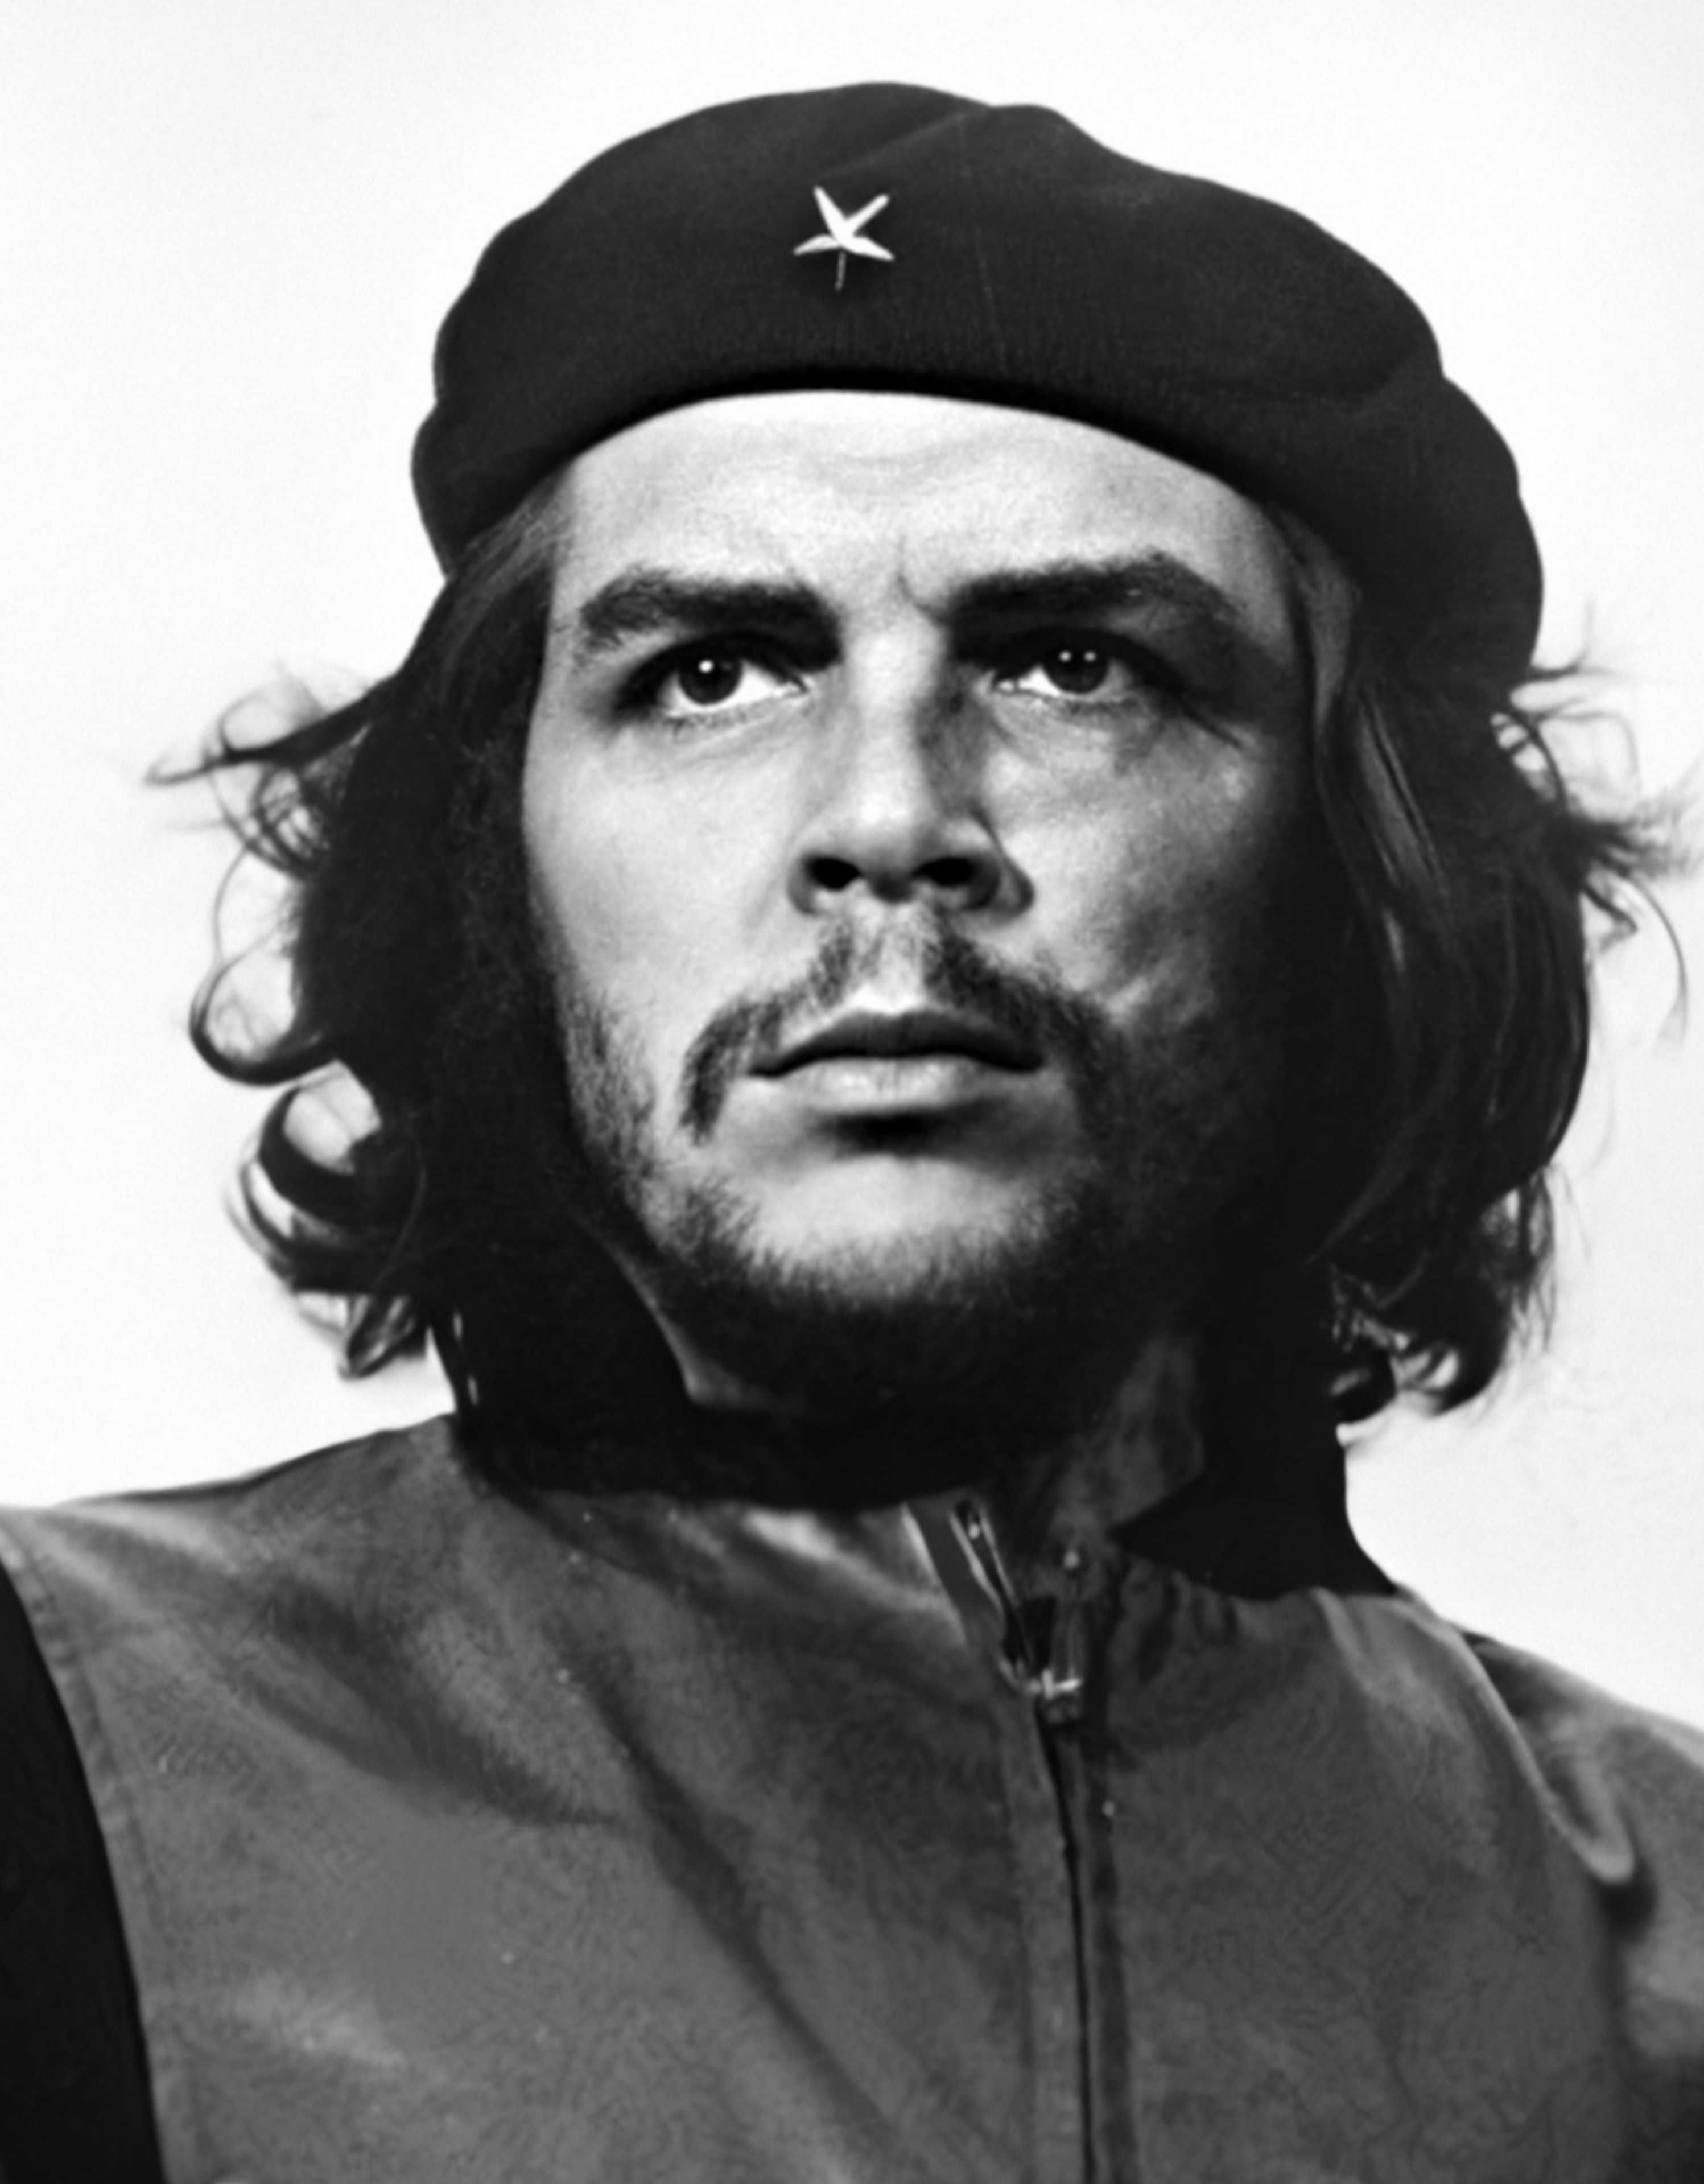 Vand bacnote cu Che Guevara si tabacos de CUBA.